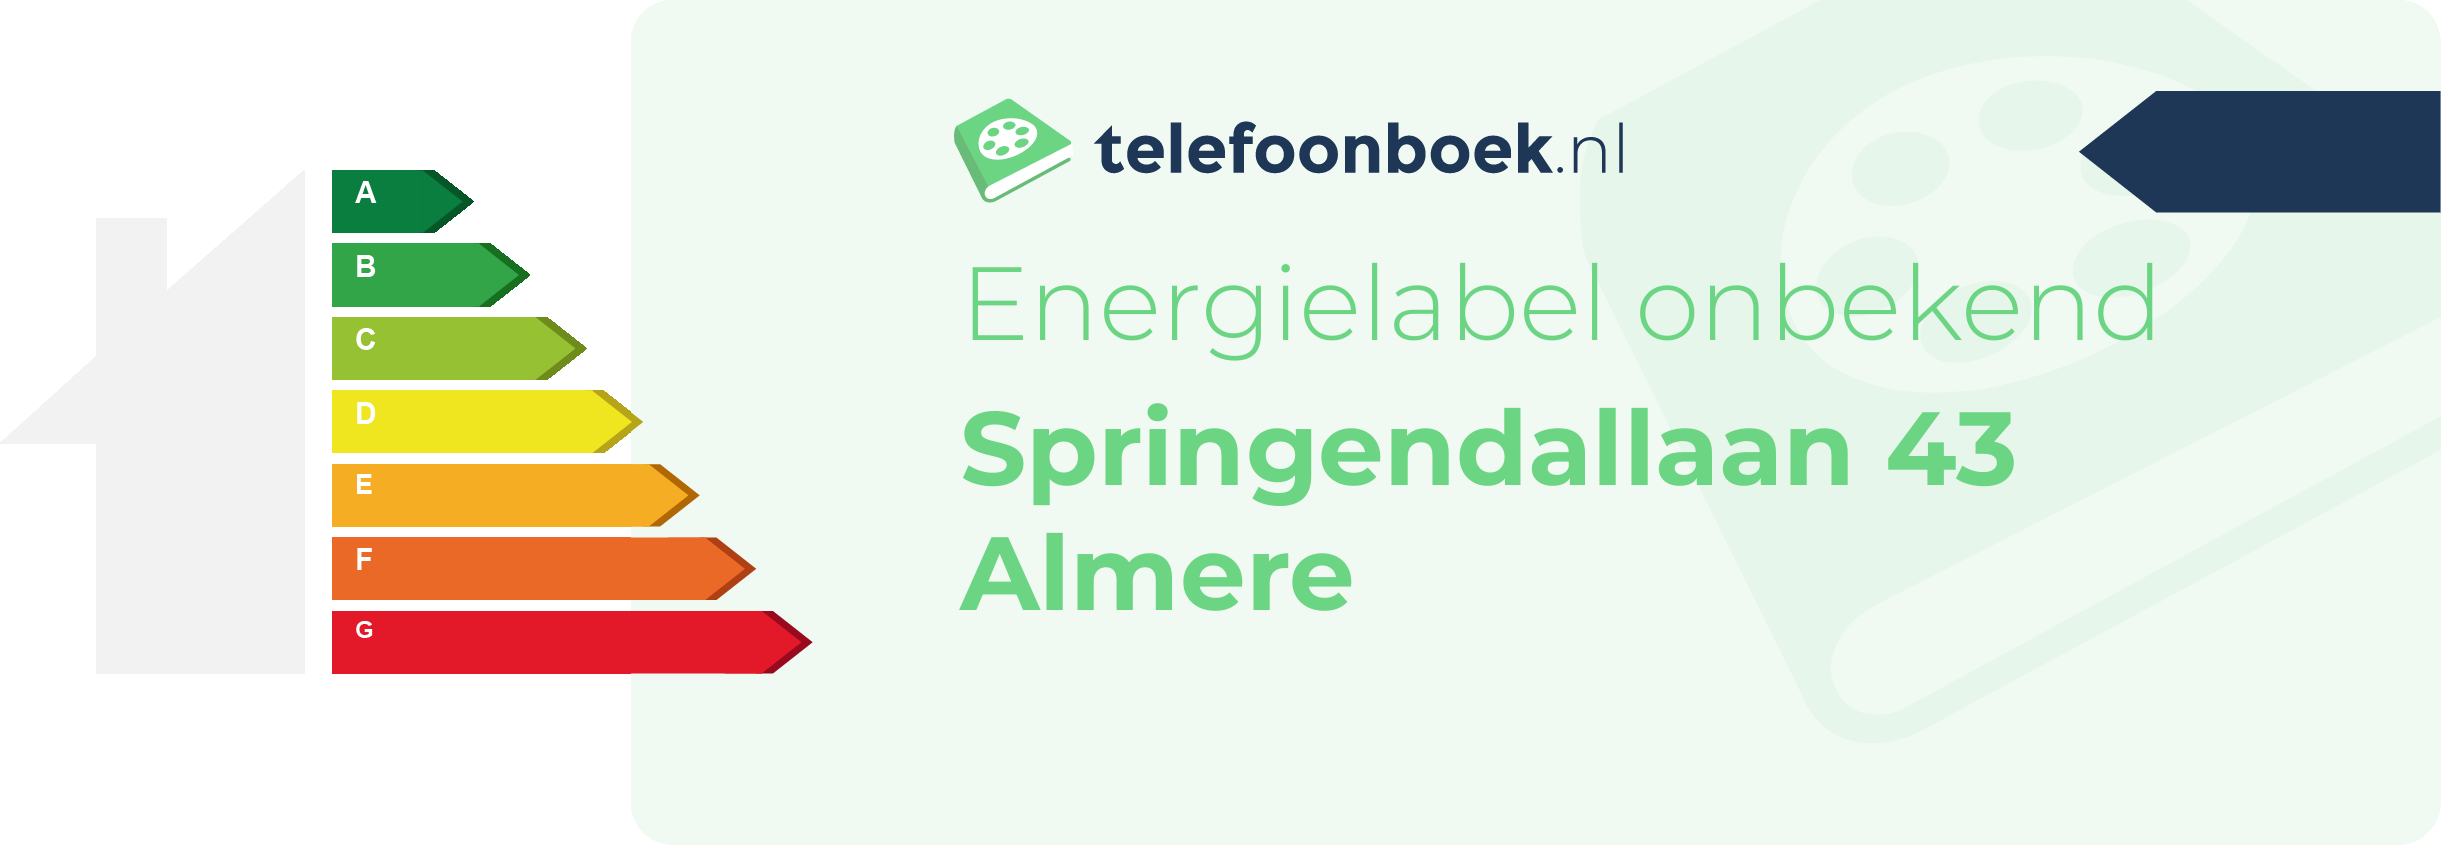 Energielabel Springendallaan 43 Almere